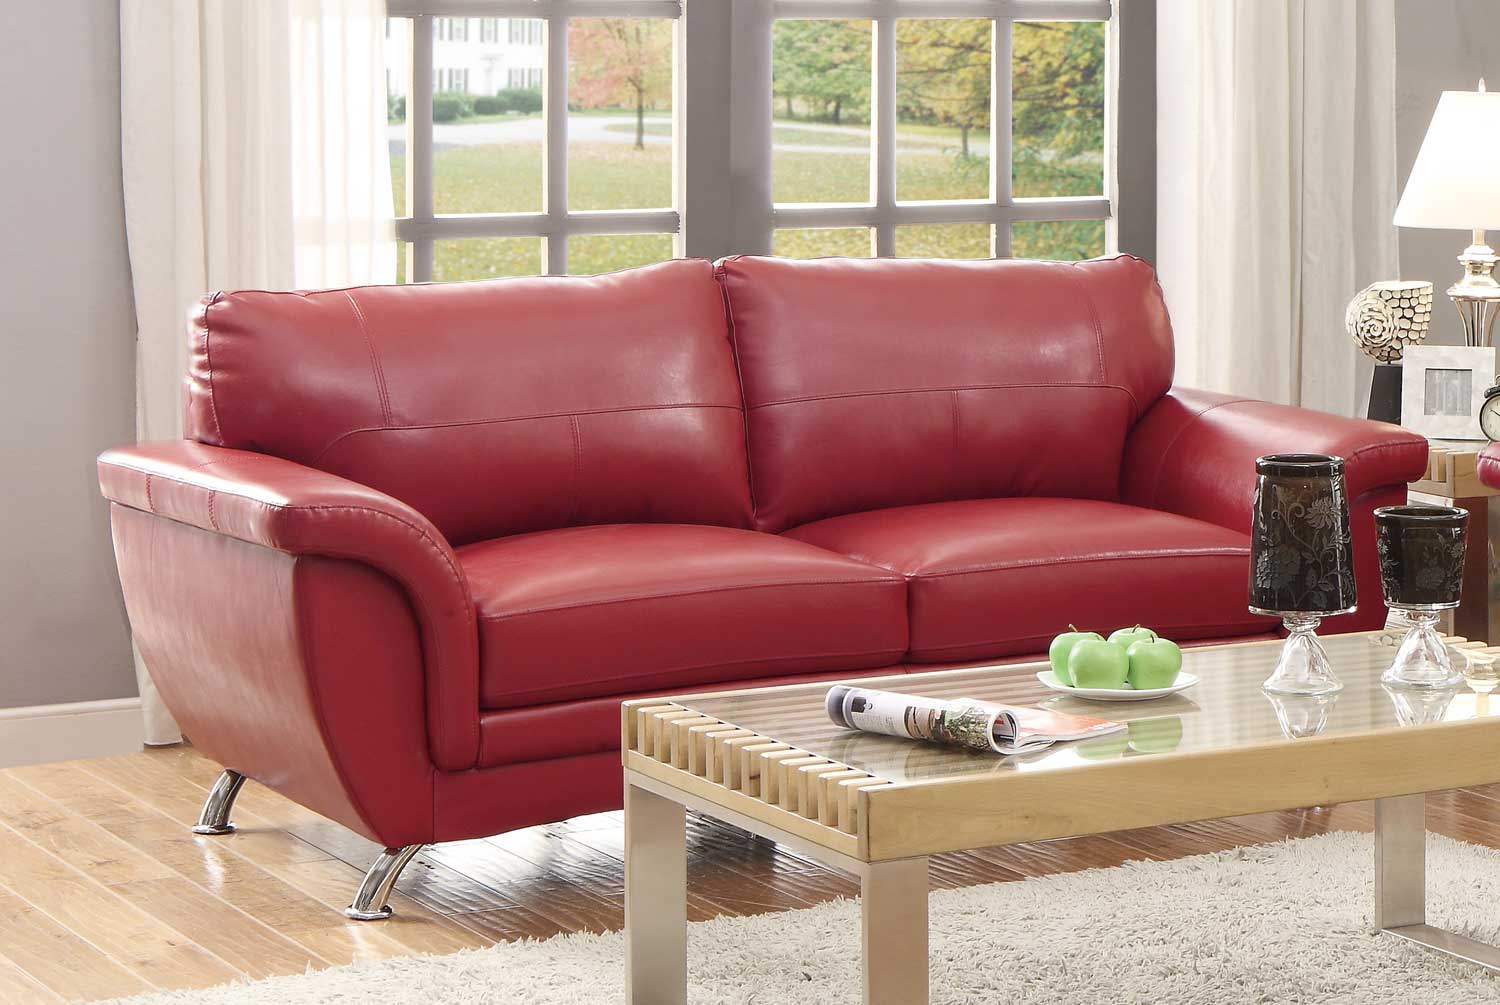 Homelegance Chaska Sofa - Red Bonded Leather Match